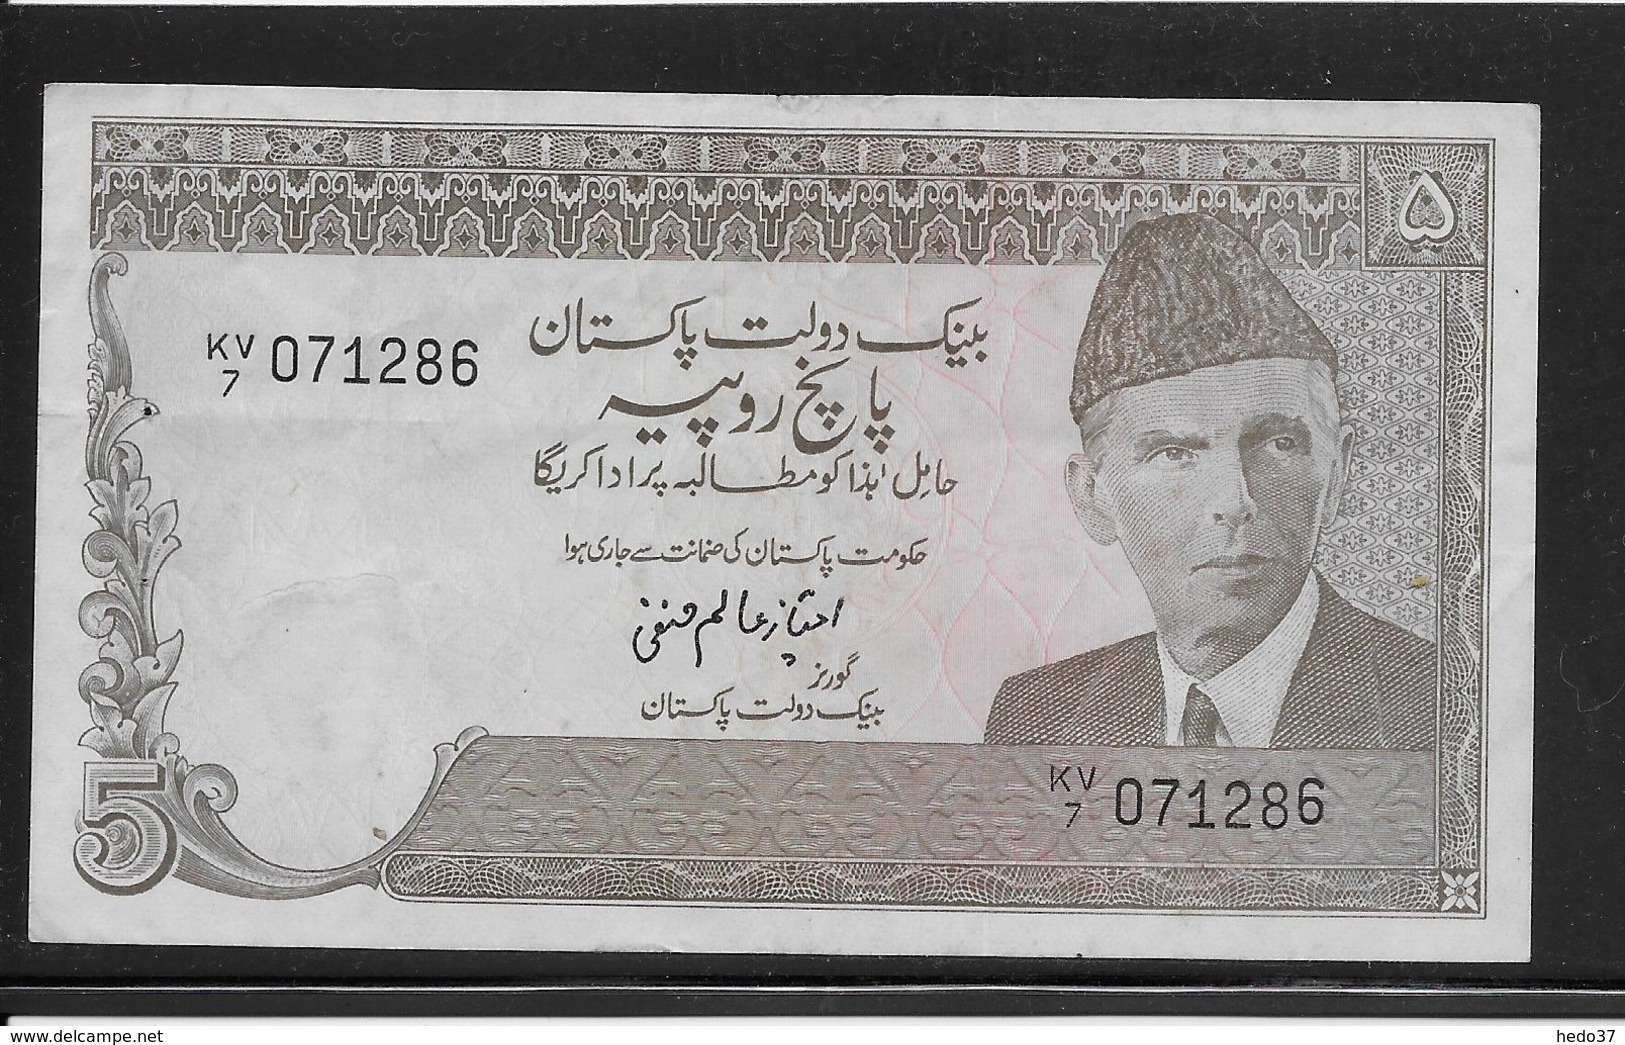 Pakistan - 5 Rupees - Pick N°38 - TTB - Pakistan